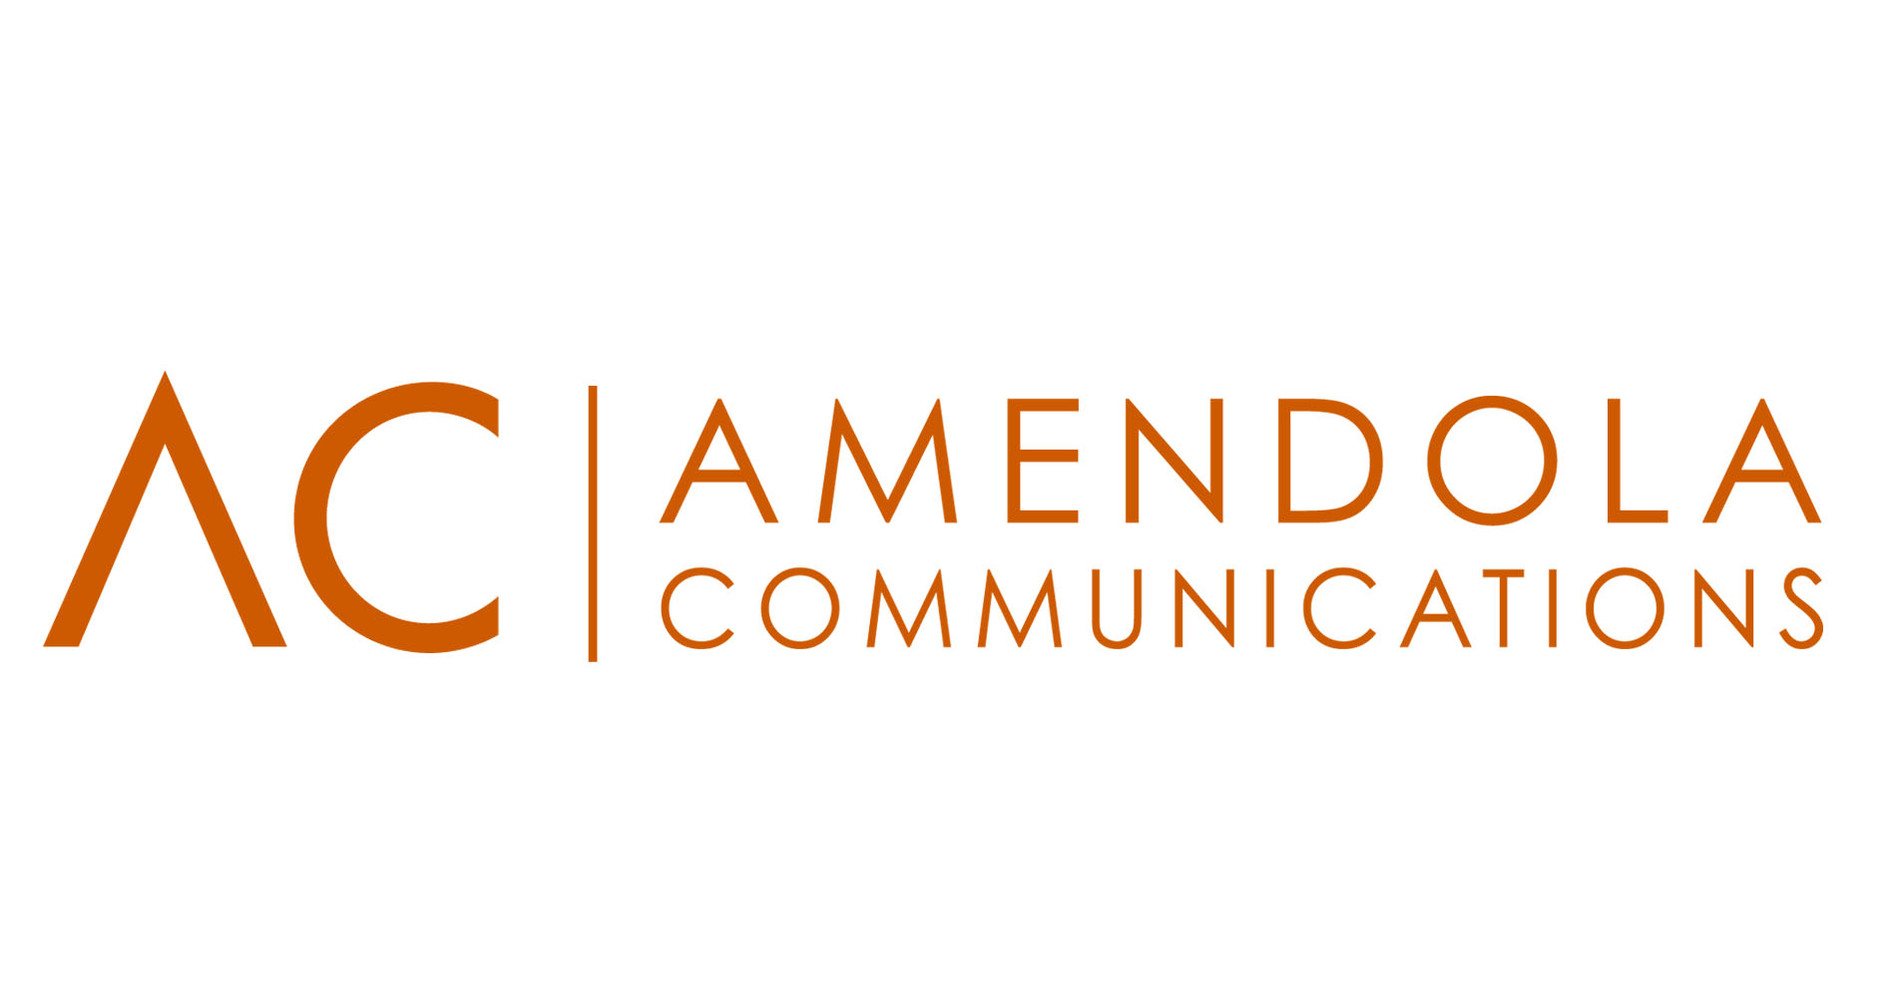 Amendola Communications wins in Best Agency Awards